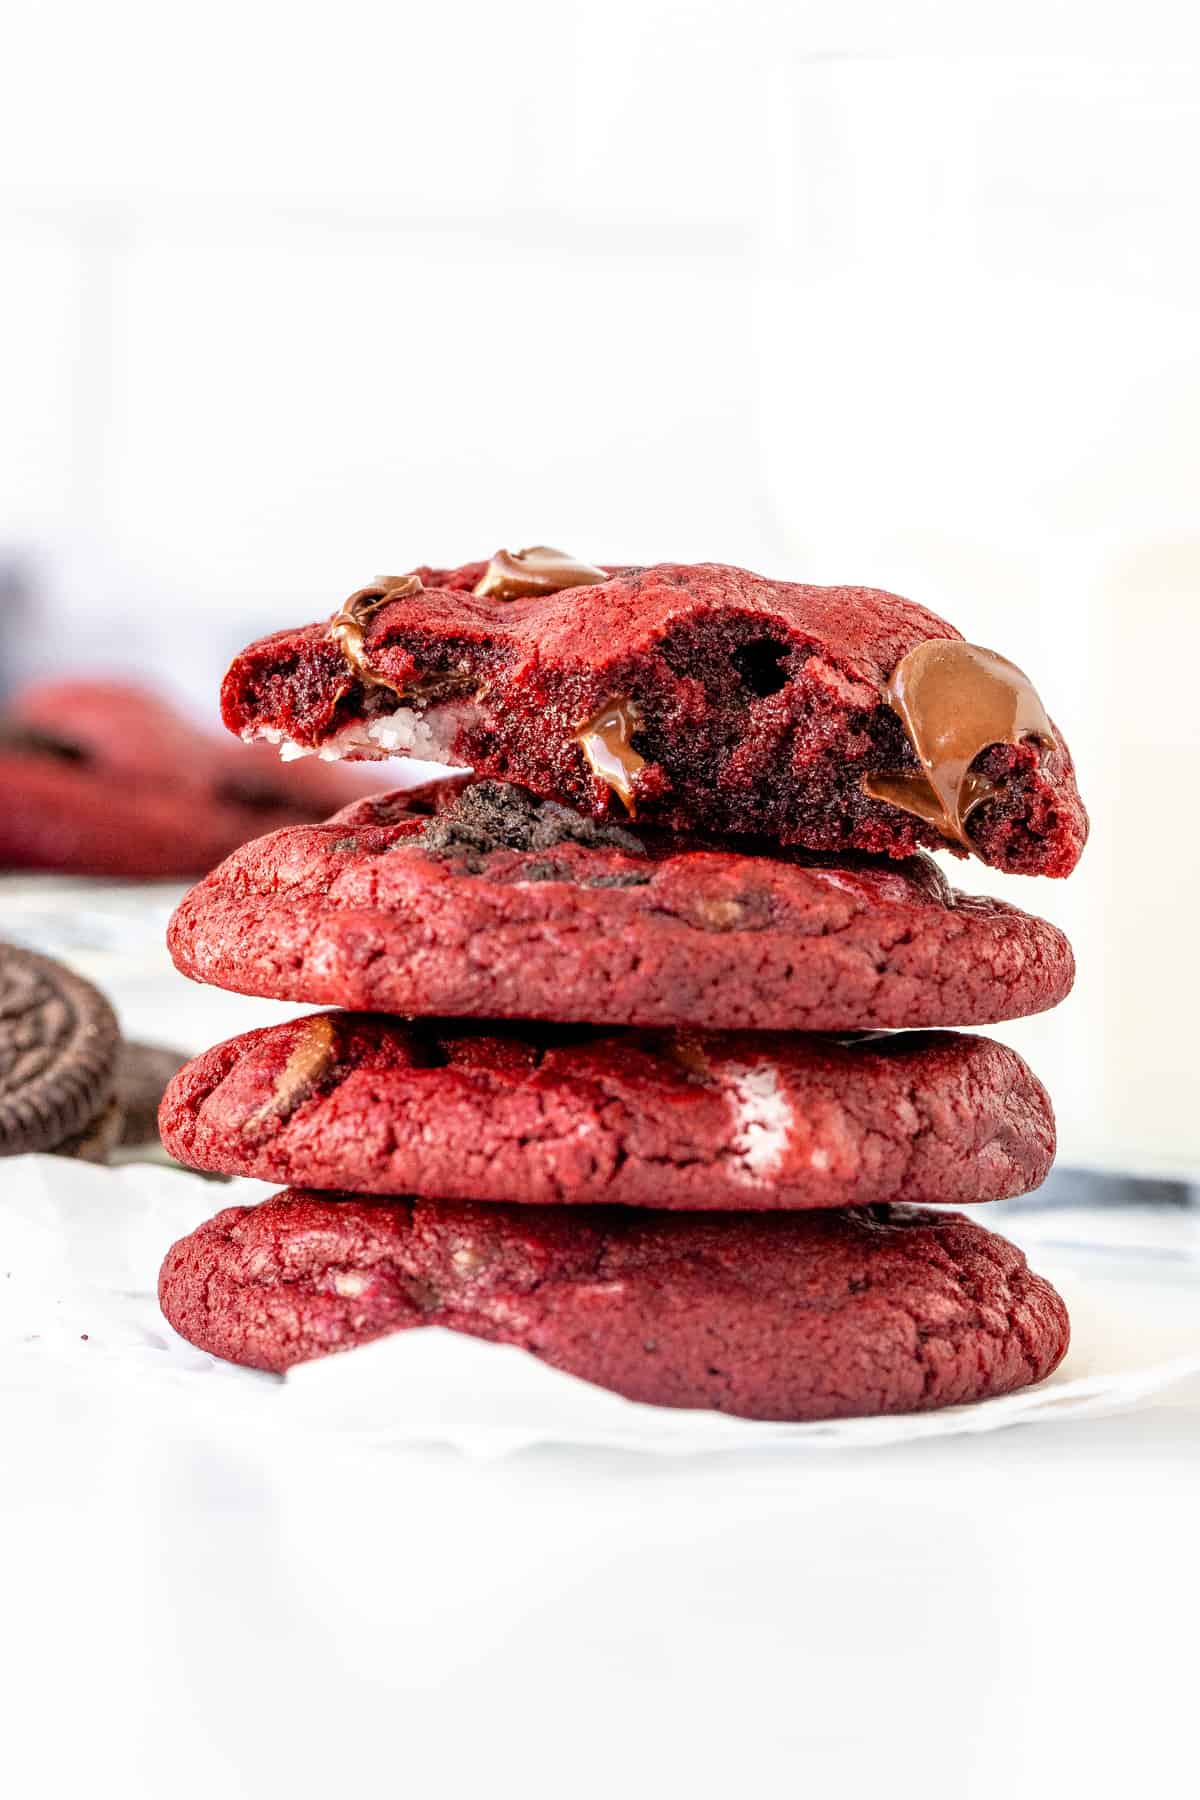 Stack or Oreo red velvet cookies, with top cookie broken in half.